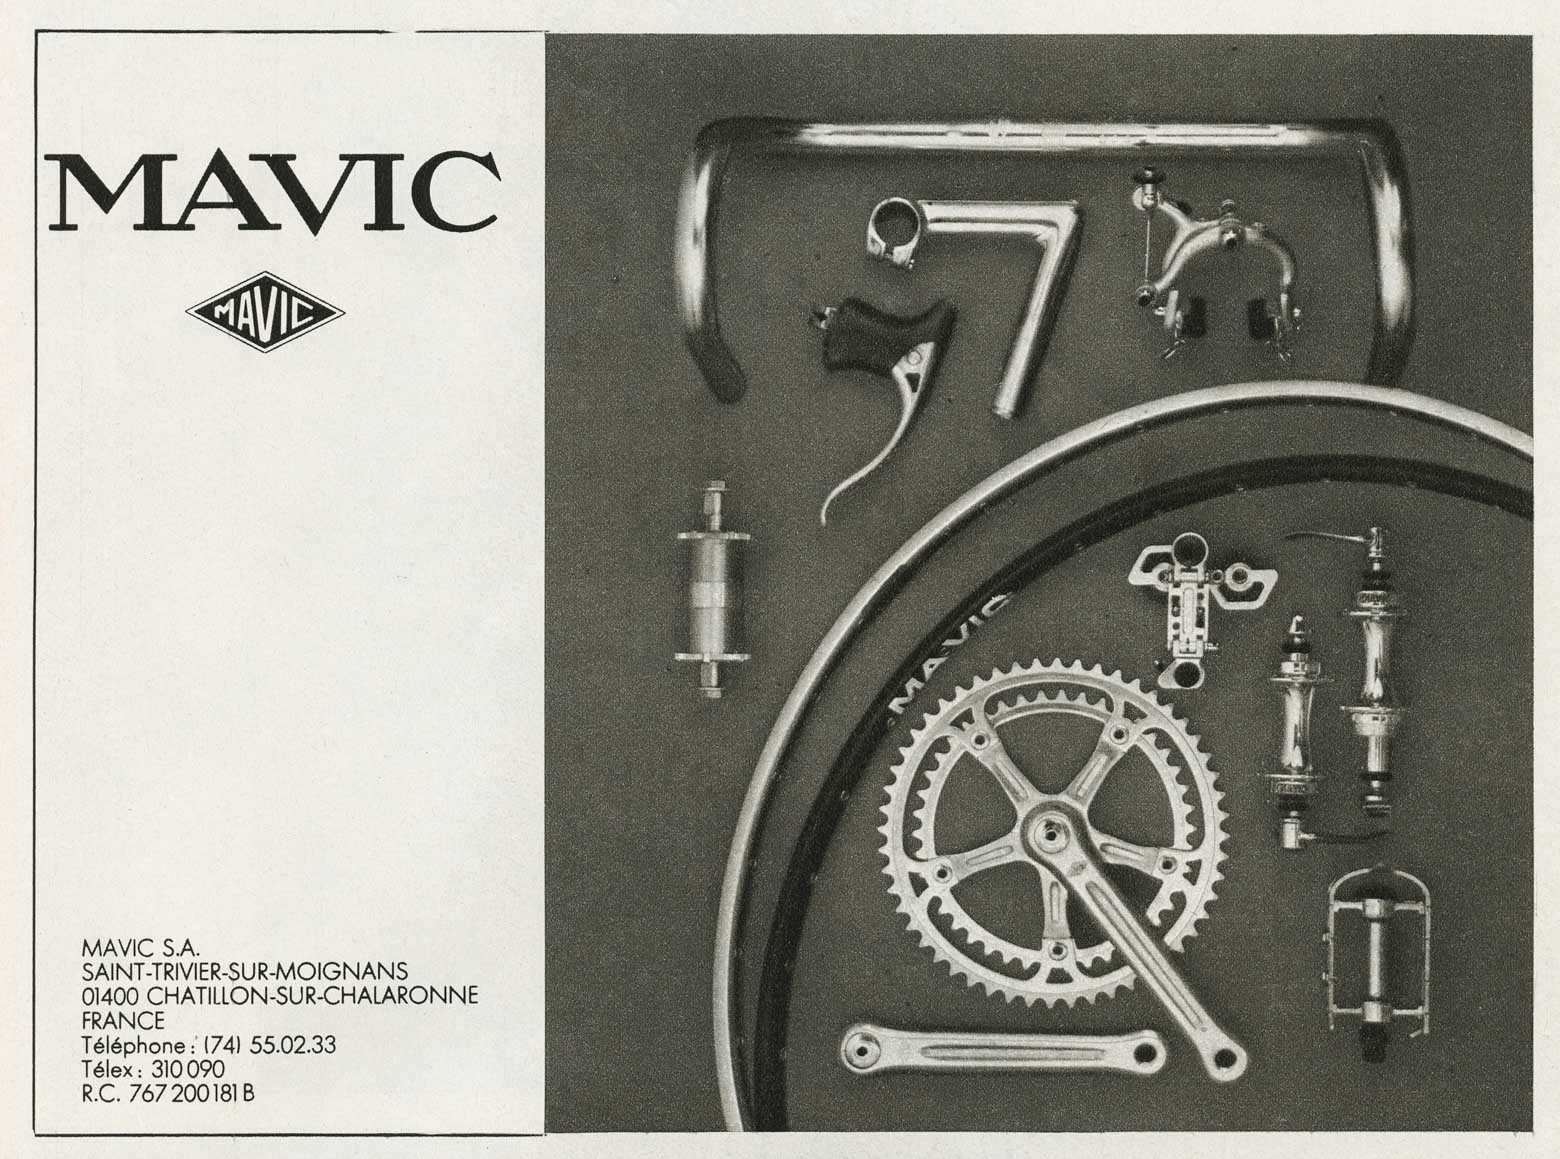 Bicisport 1980 April - MAVIC advert main image